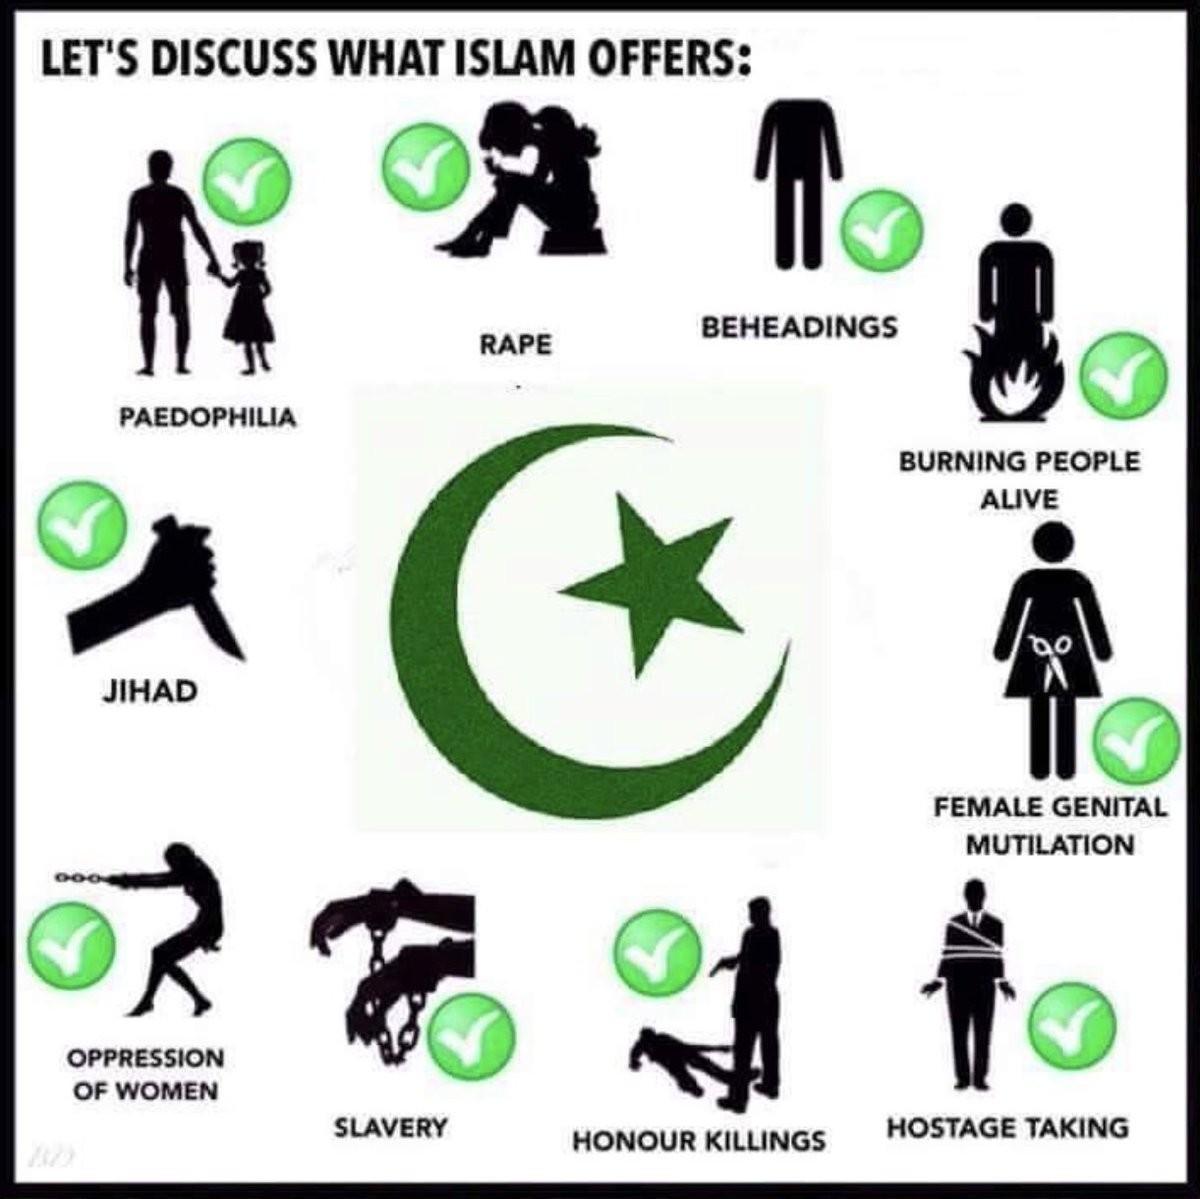 what islam has to offer:pedophilia, jihad, oppression of women, rape